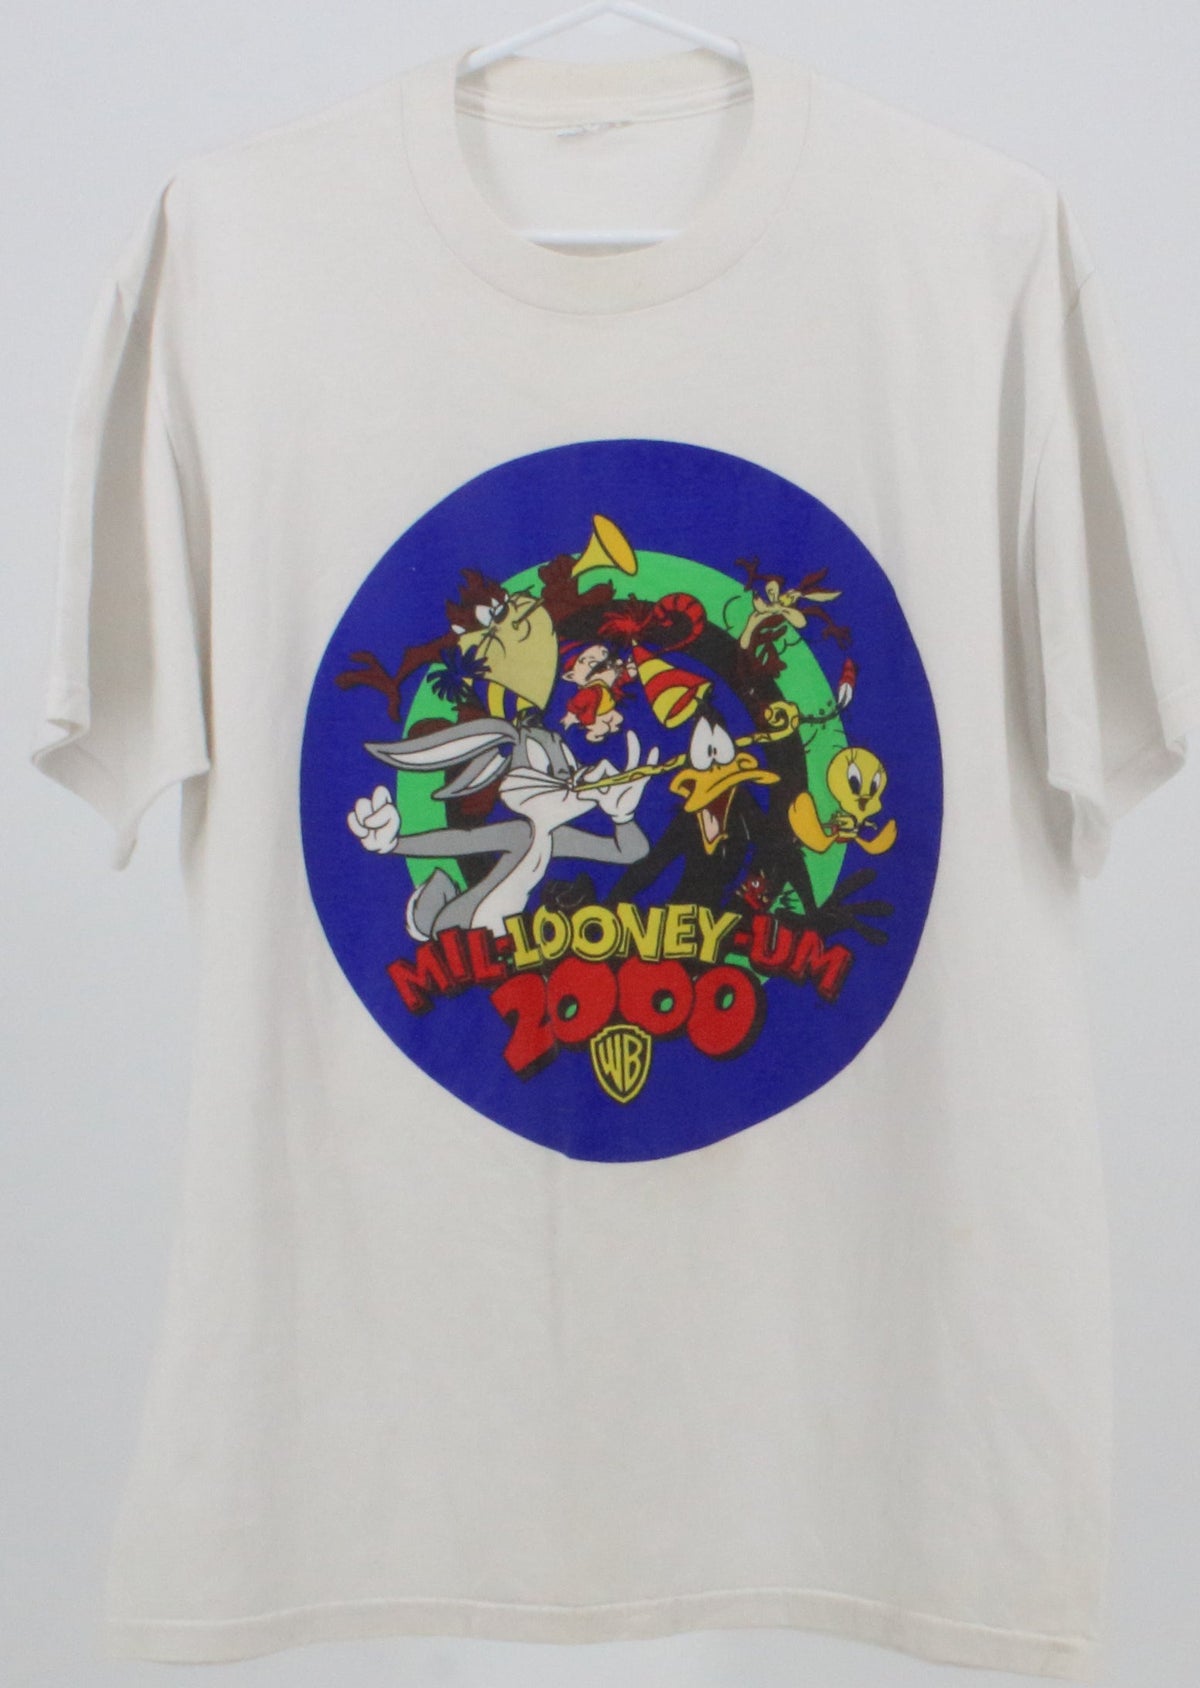 Mil-Looney-Um 2000 WB White T-Shirt